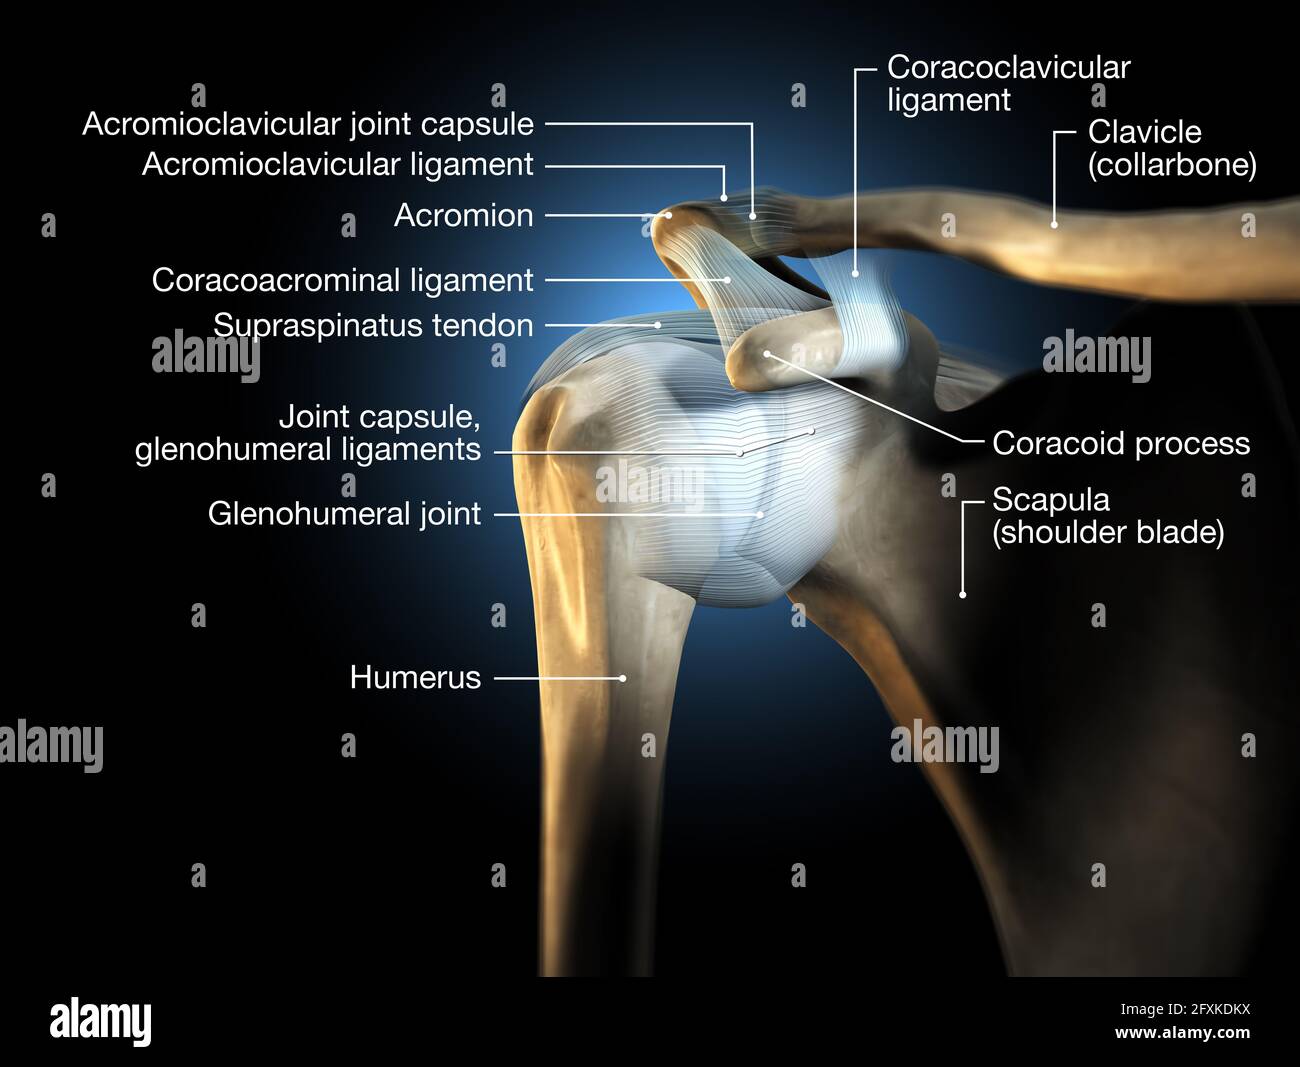 3d Illustration Showing Human Shoulder Joint With Bones And Ligaments